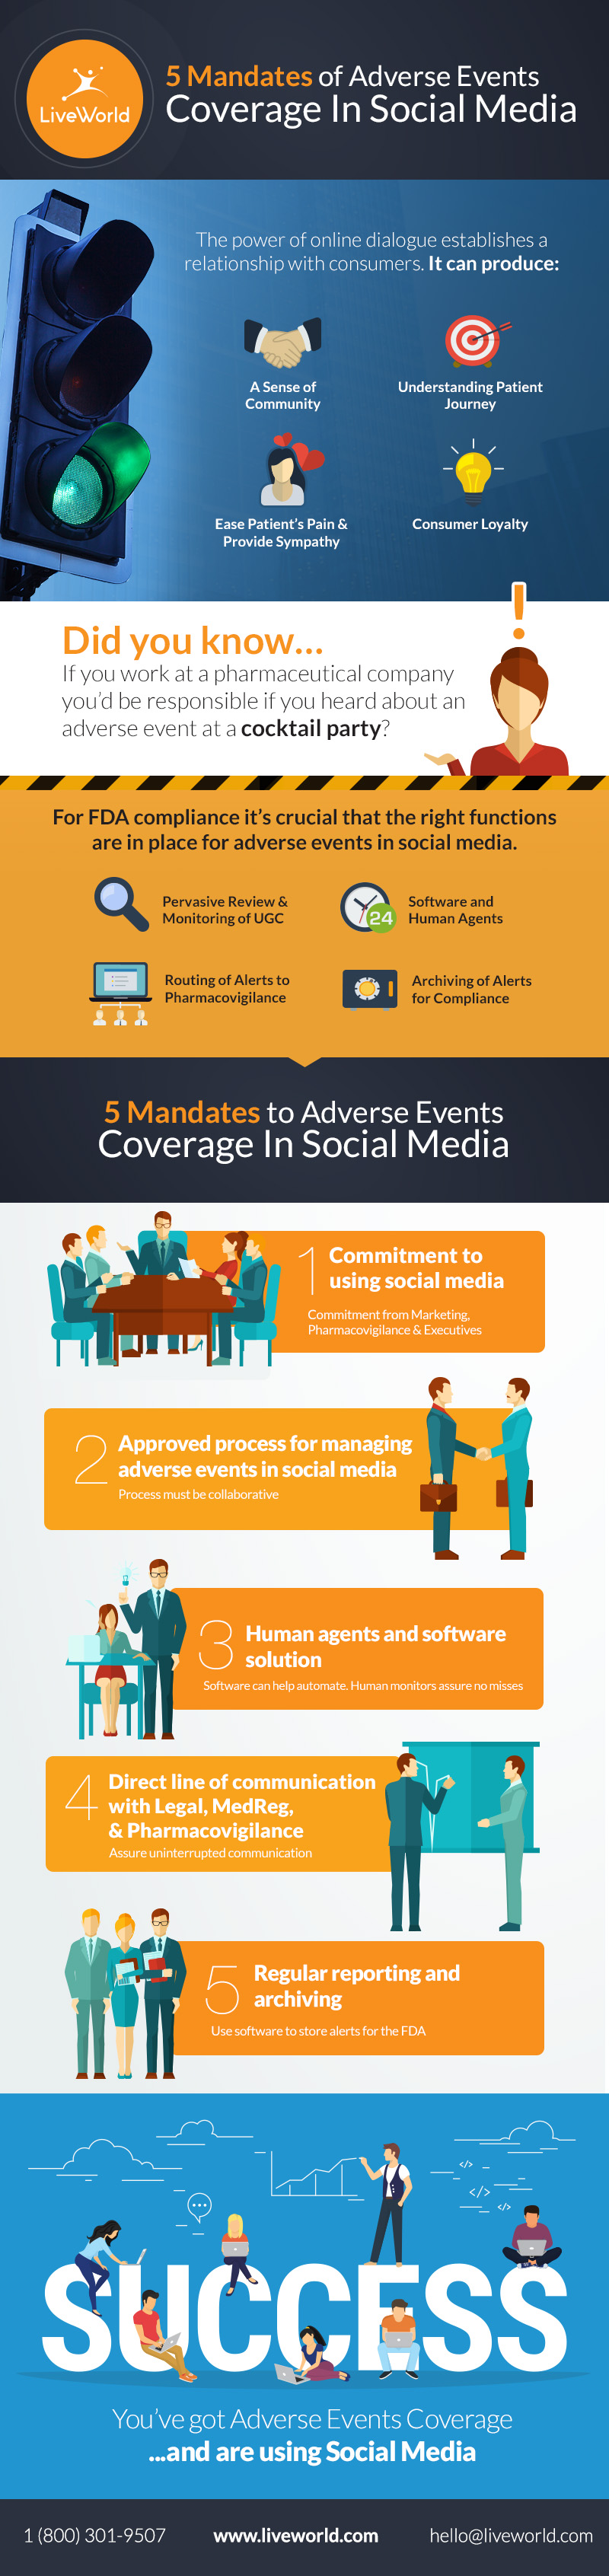 Managing Adverse Events in Social Media